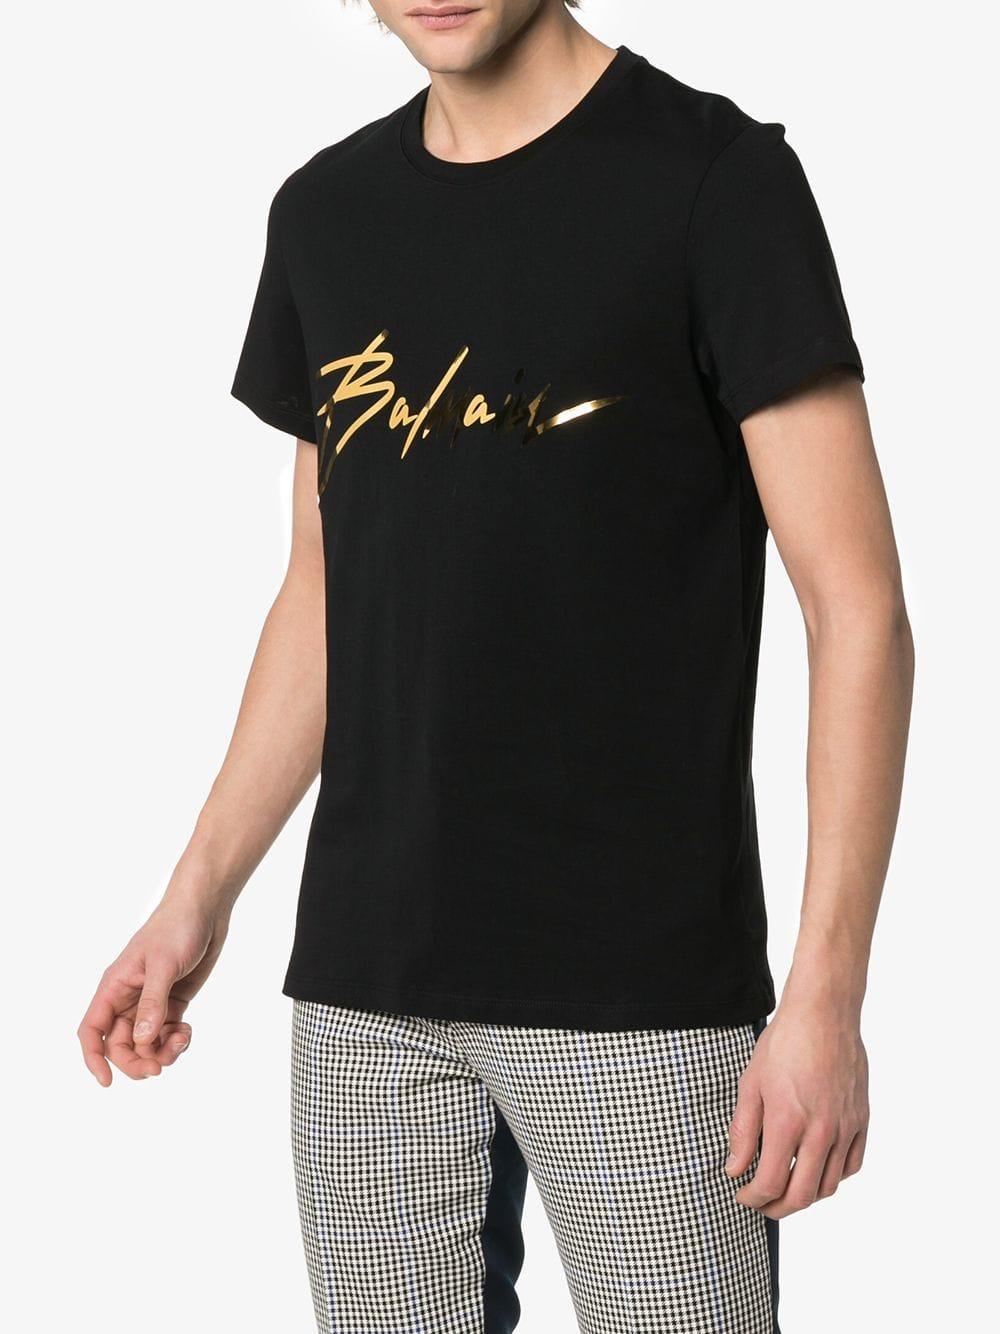 Balmain Signature Logo Cotton T-shirt in Black for Men - Lyst